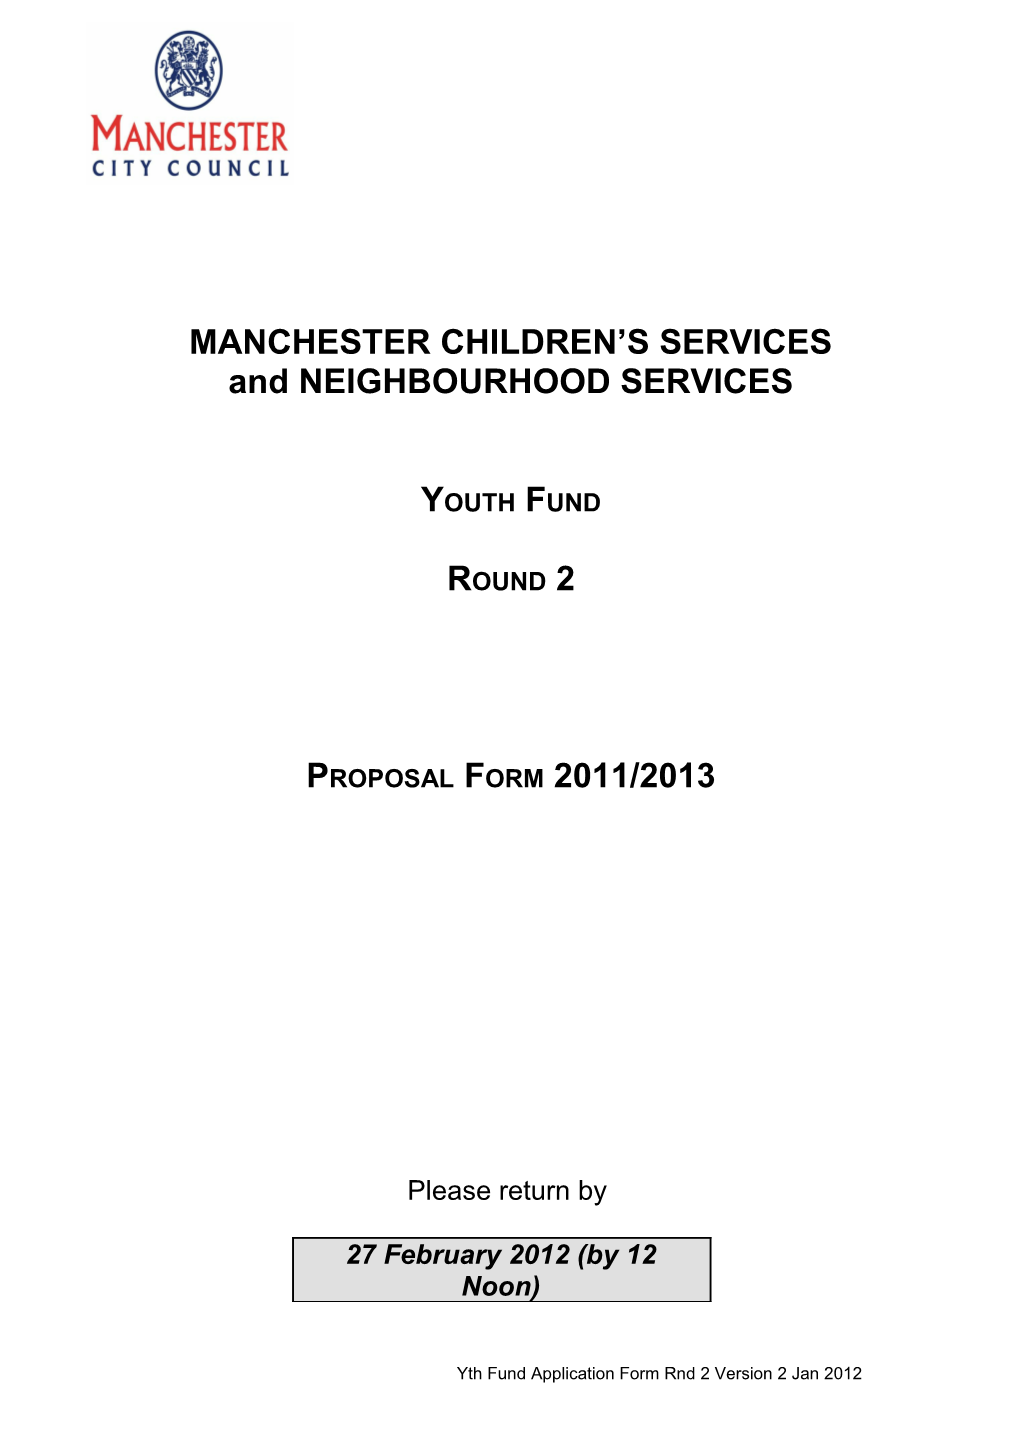 MANCHESTER CHILDREN S SERVICES and NEIGHBOURHOOD SERVICES